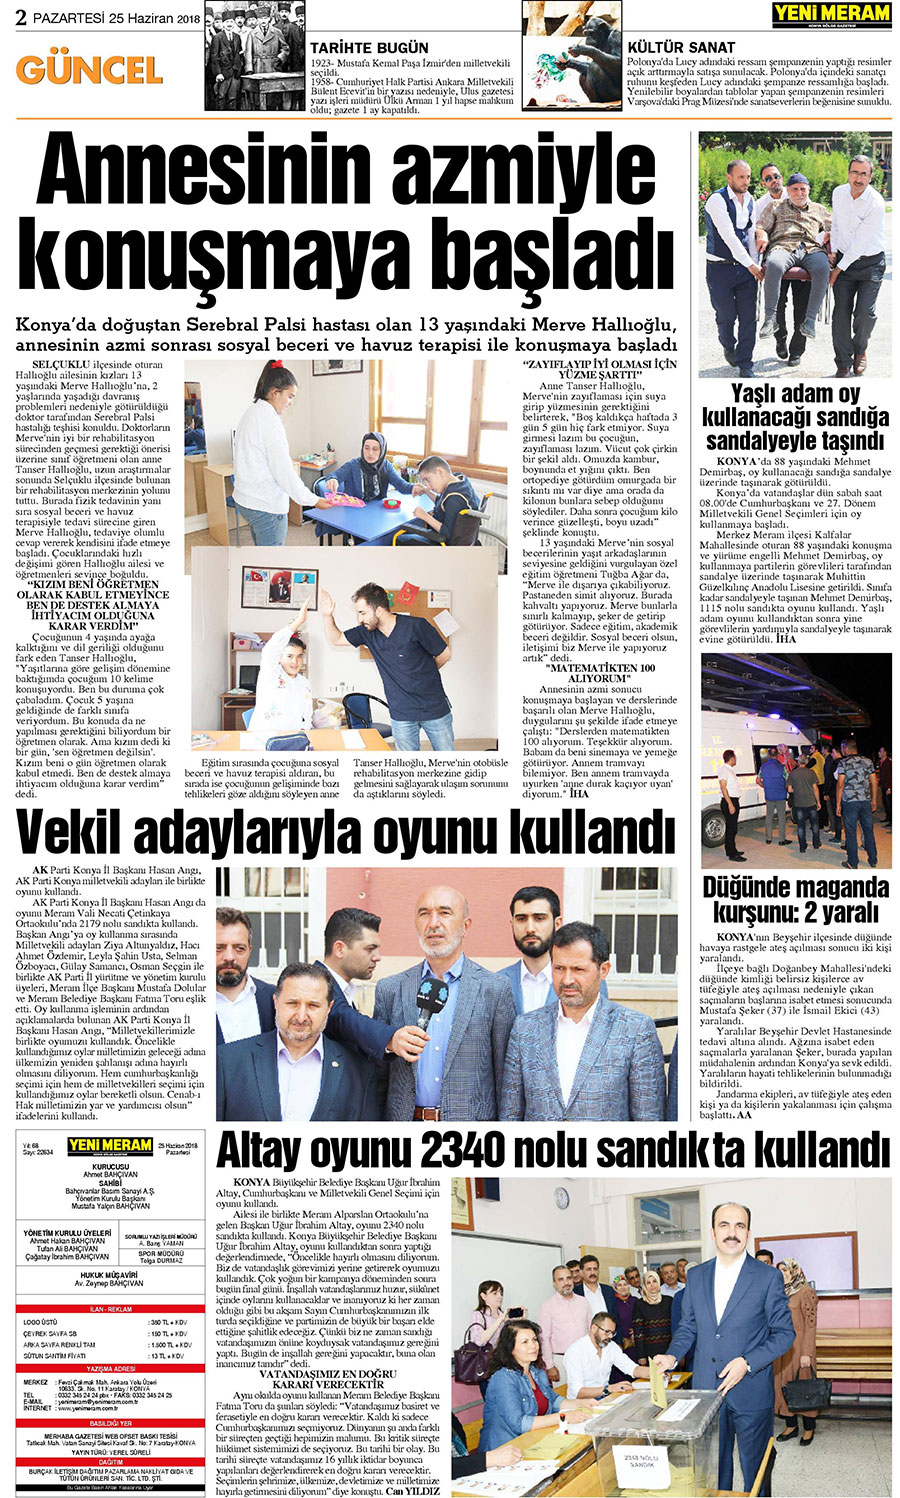 25 Haziran 2018 Yeni Meram Gazetesi